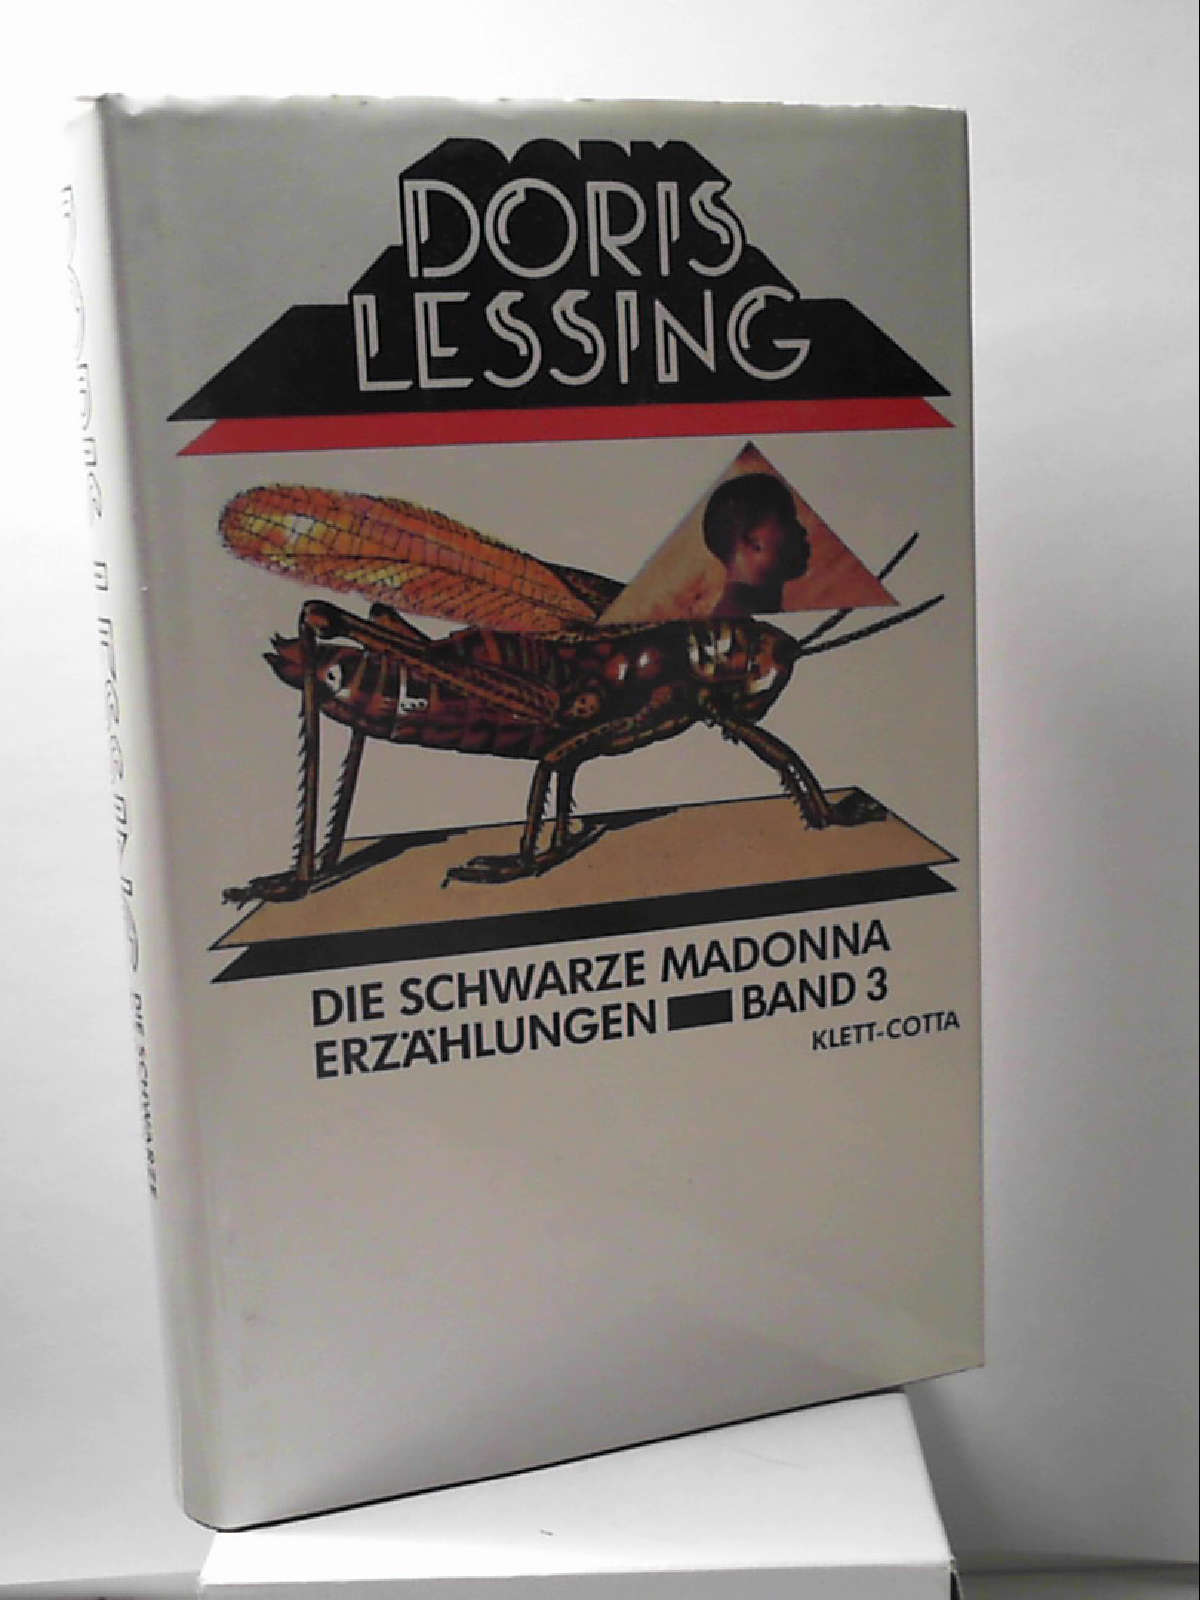 Erzählungen, Bd.3: Die schwarze Madonna [Hardcover] Doris Lessing; Manfred Ohl and Hans Sartorius - Doris Lessing